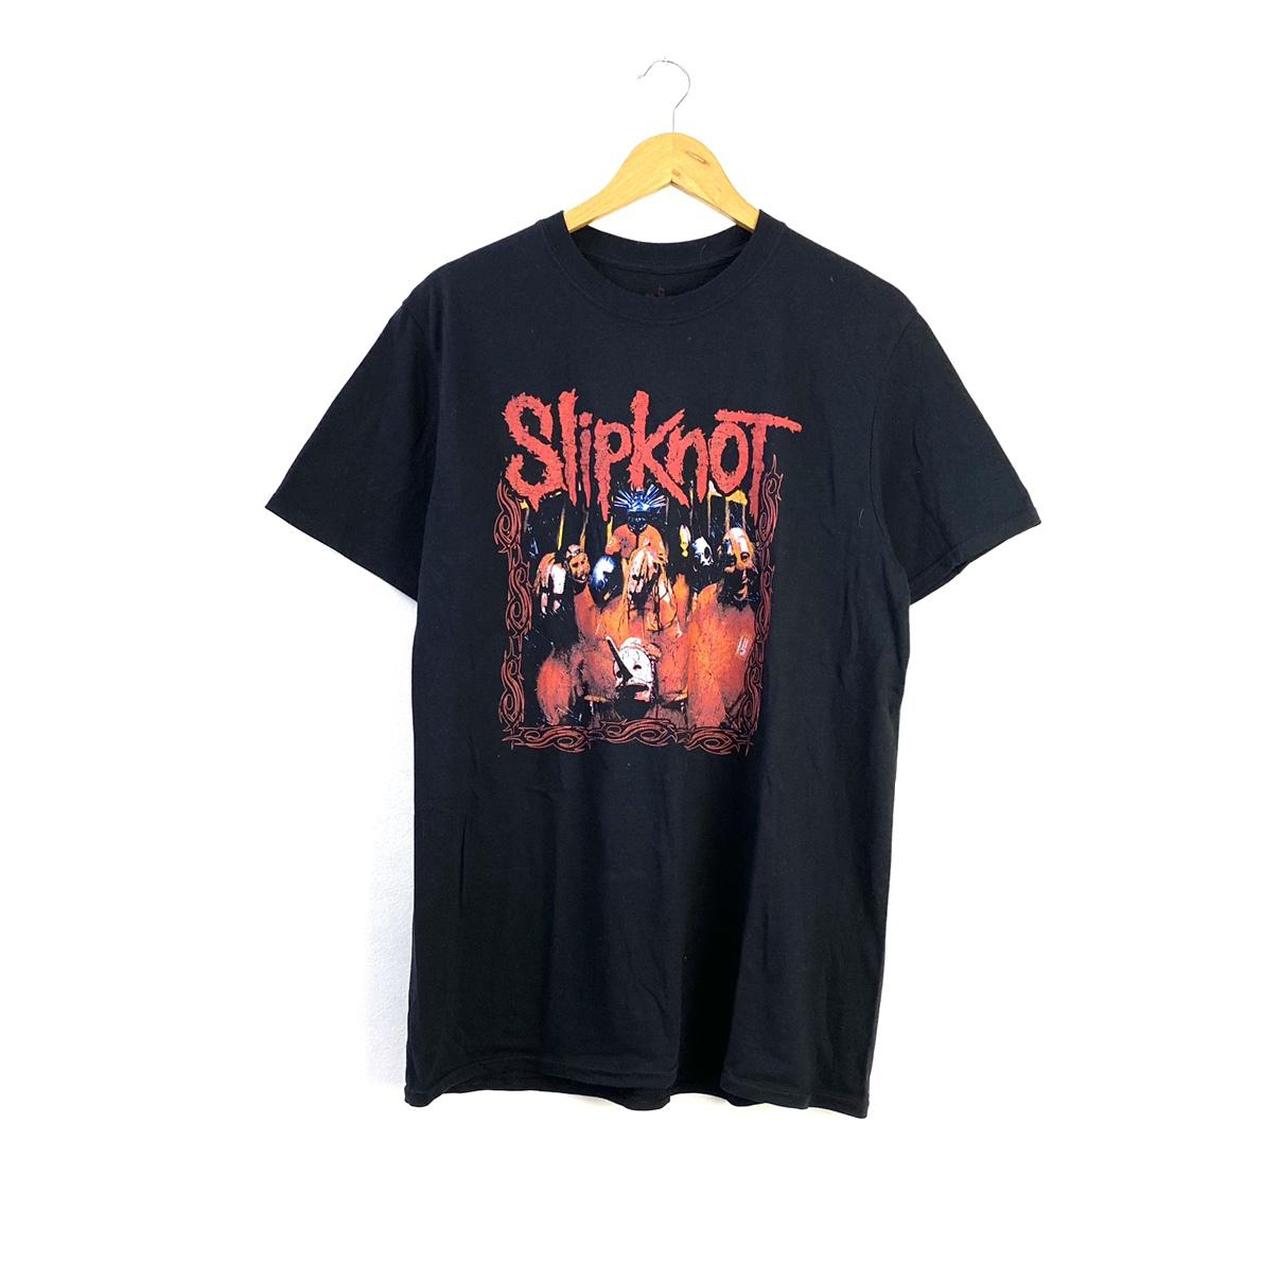 Slipknot t shirt - size large but fits better as a... - Depop